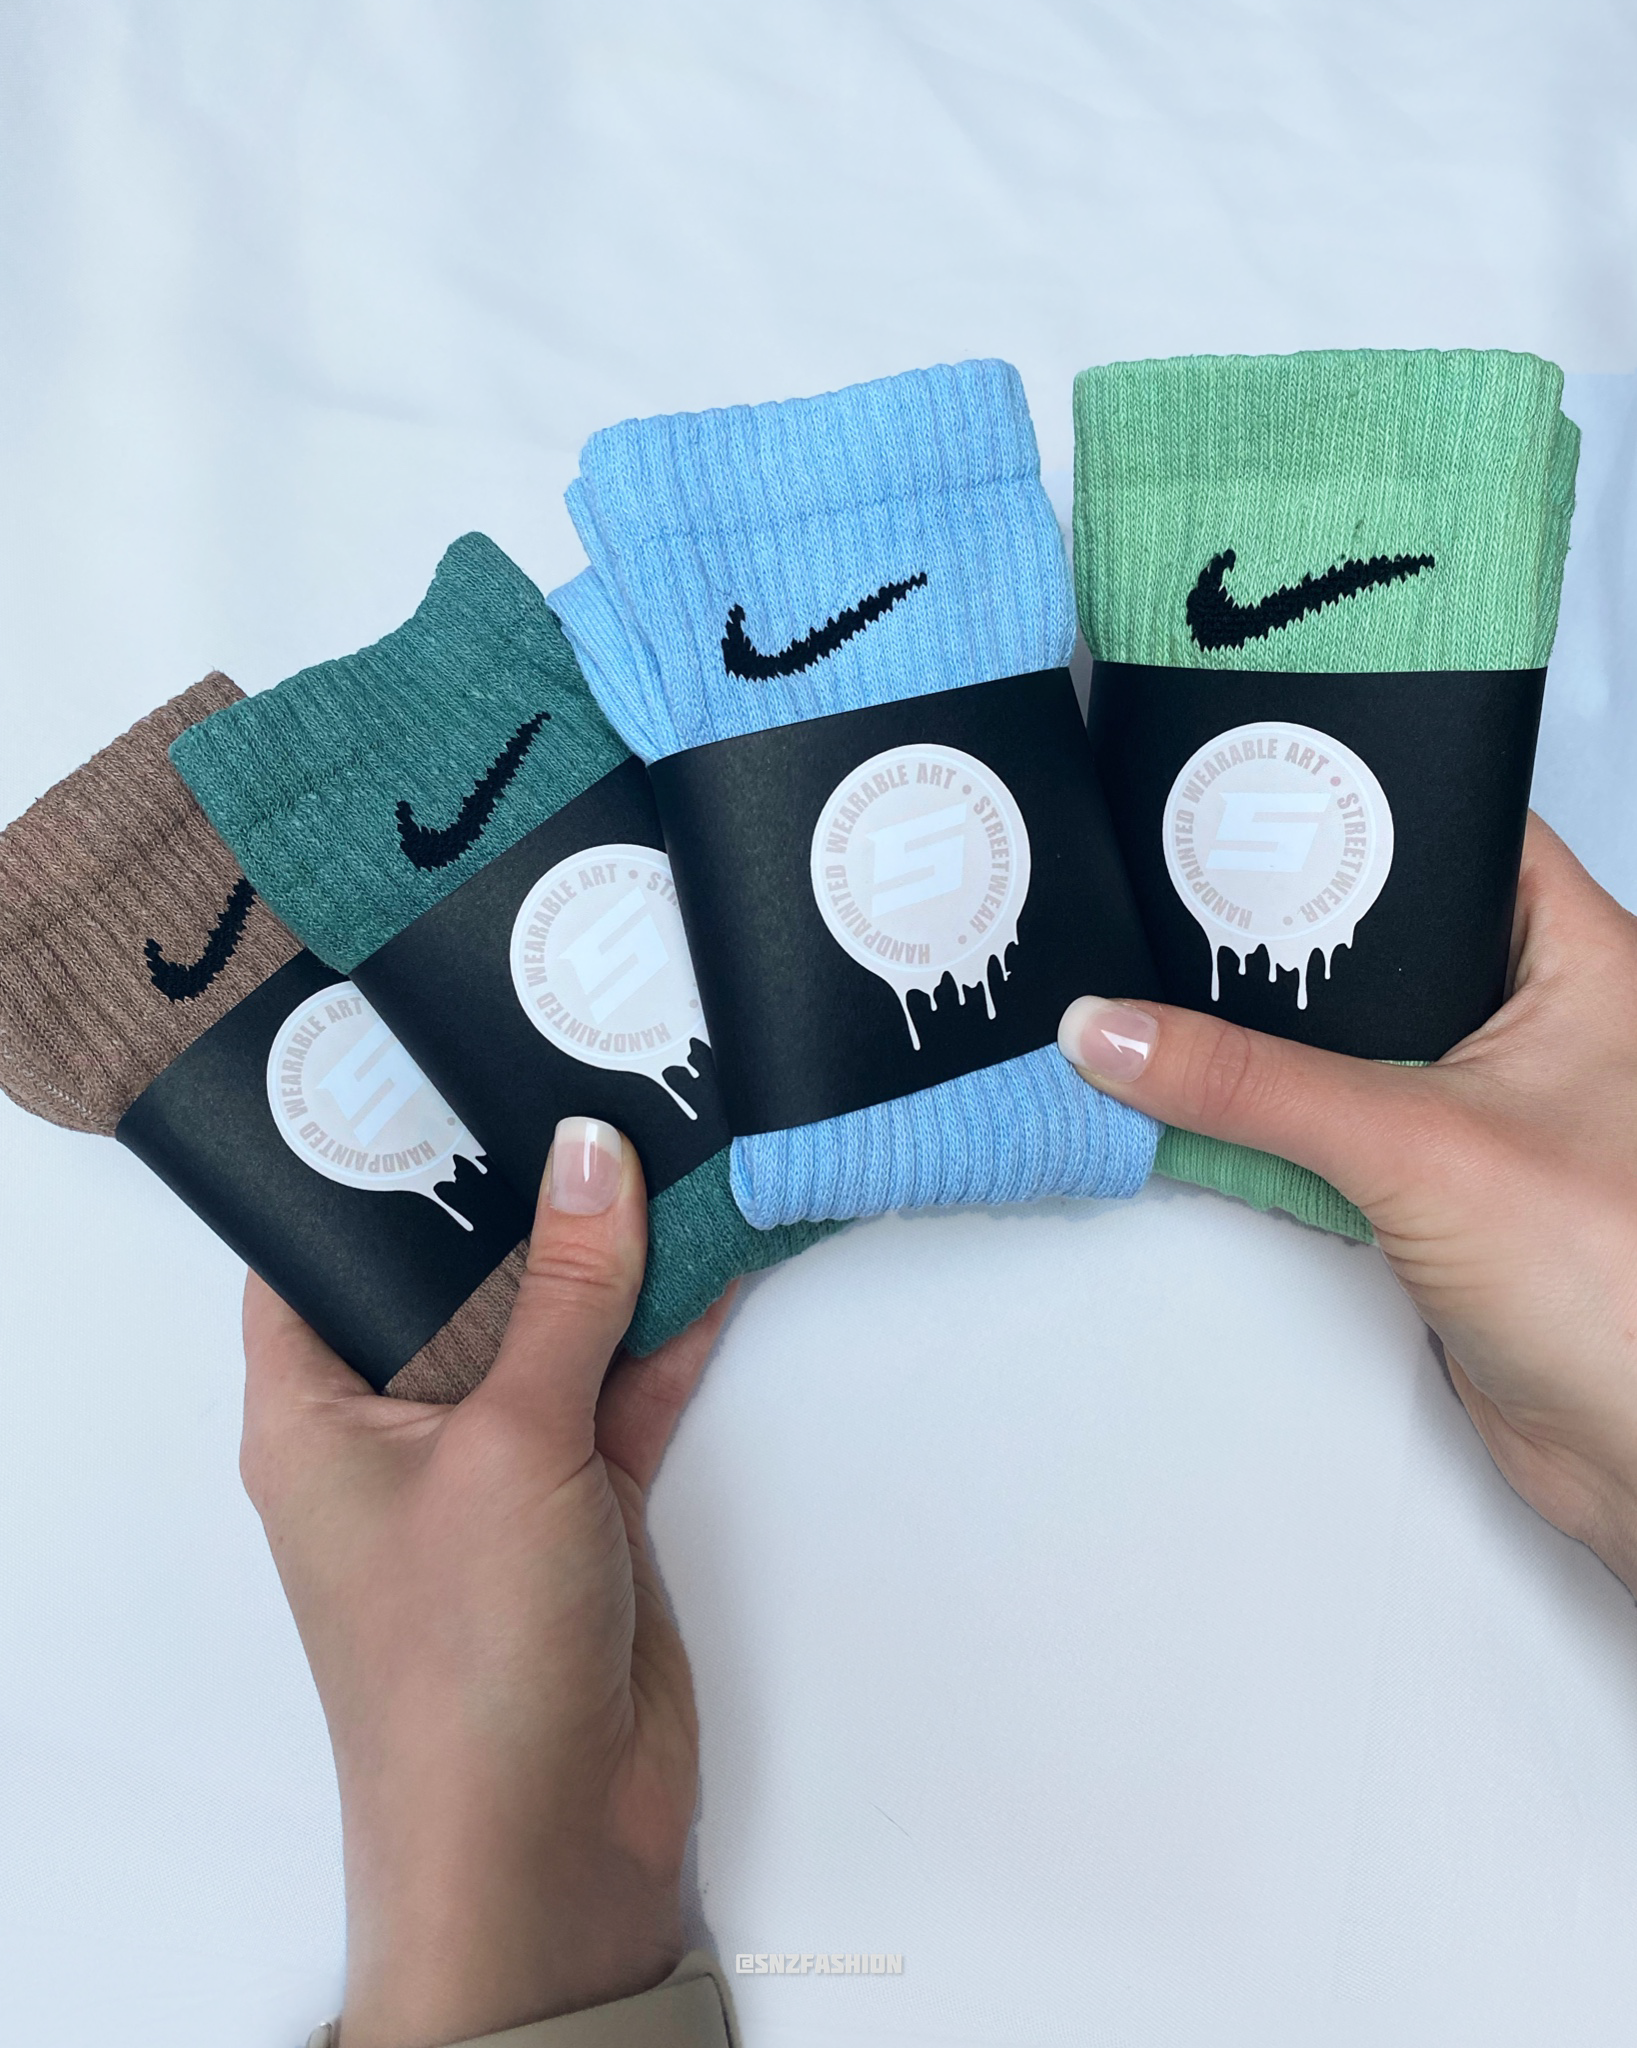 Nike KD Versatility Crew Socks (Iced Jade/Blu/Circuit Org, M)